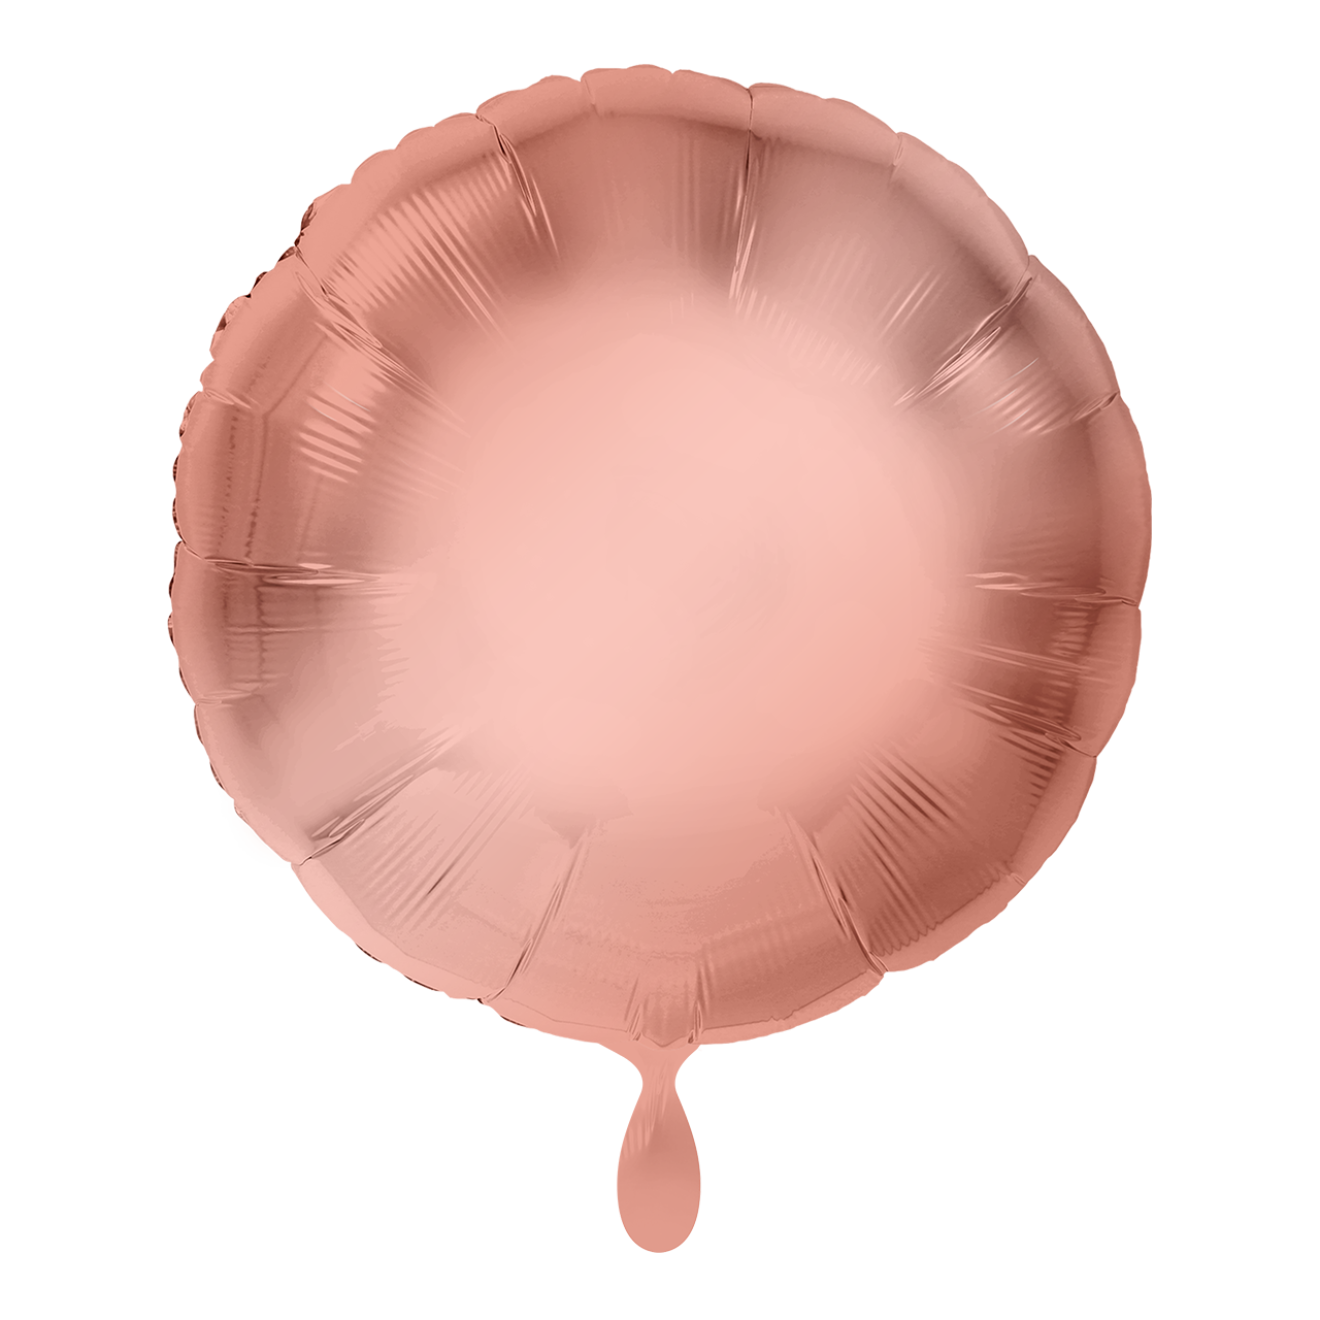 1 Balloon - Stern - Rot